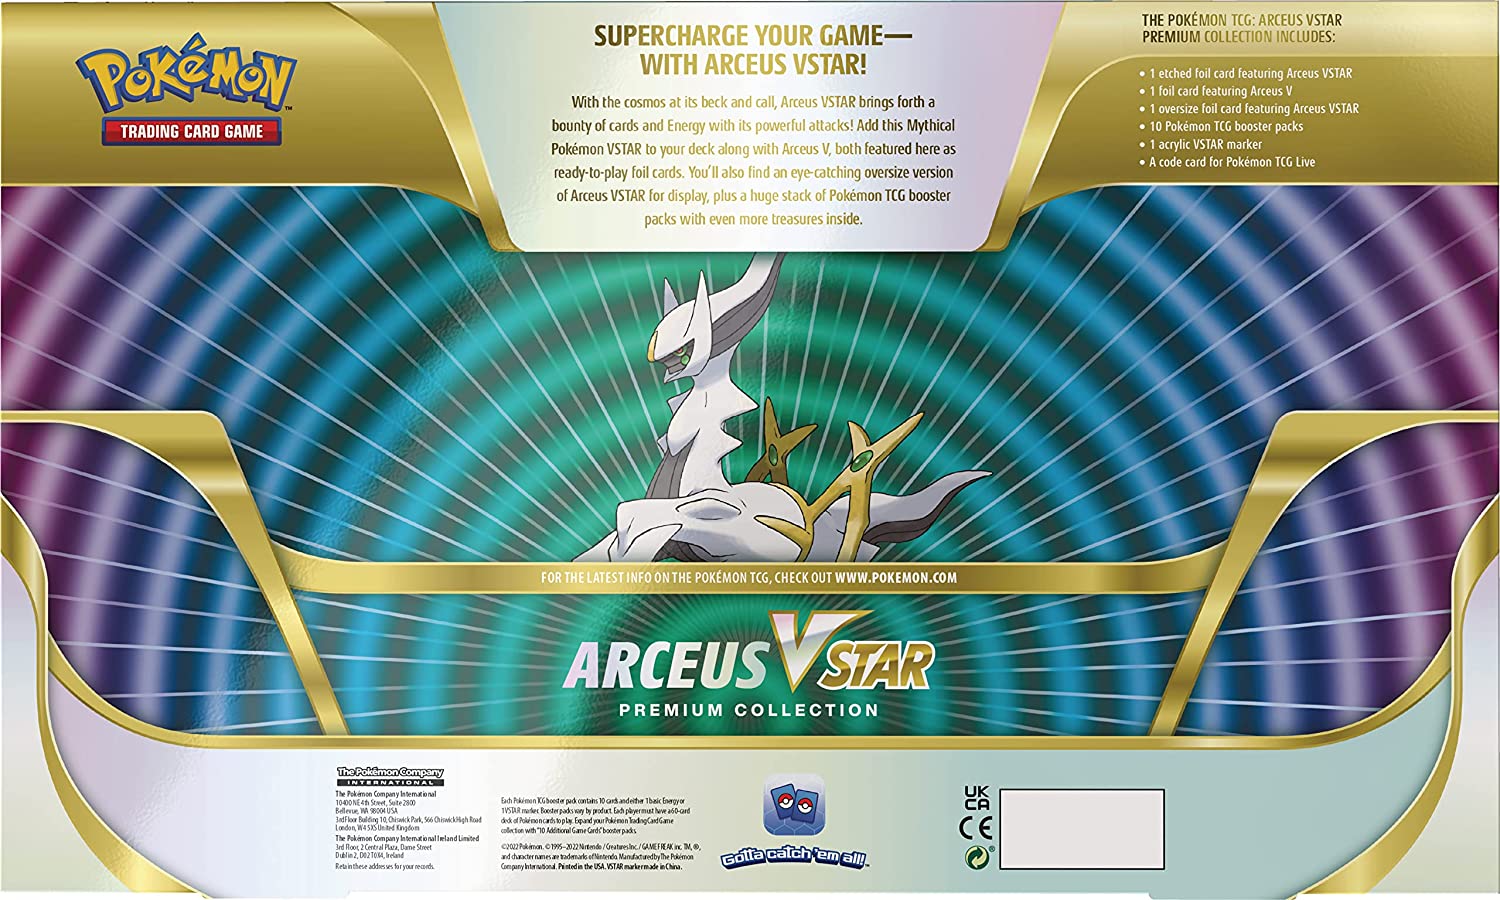 Arceus VSTAR Premium Collection back